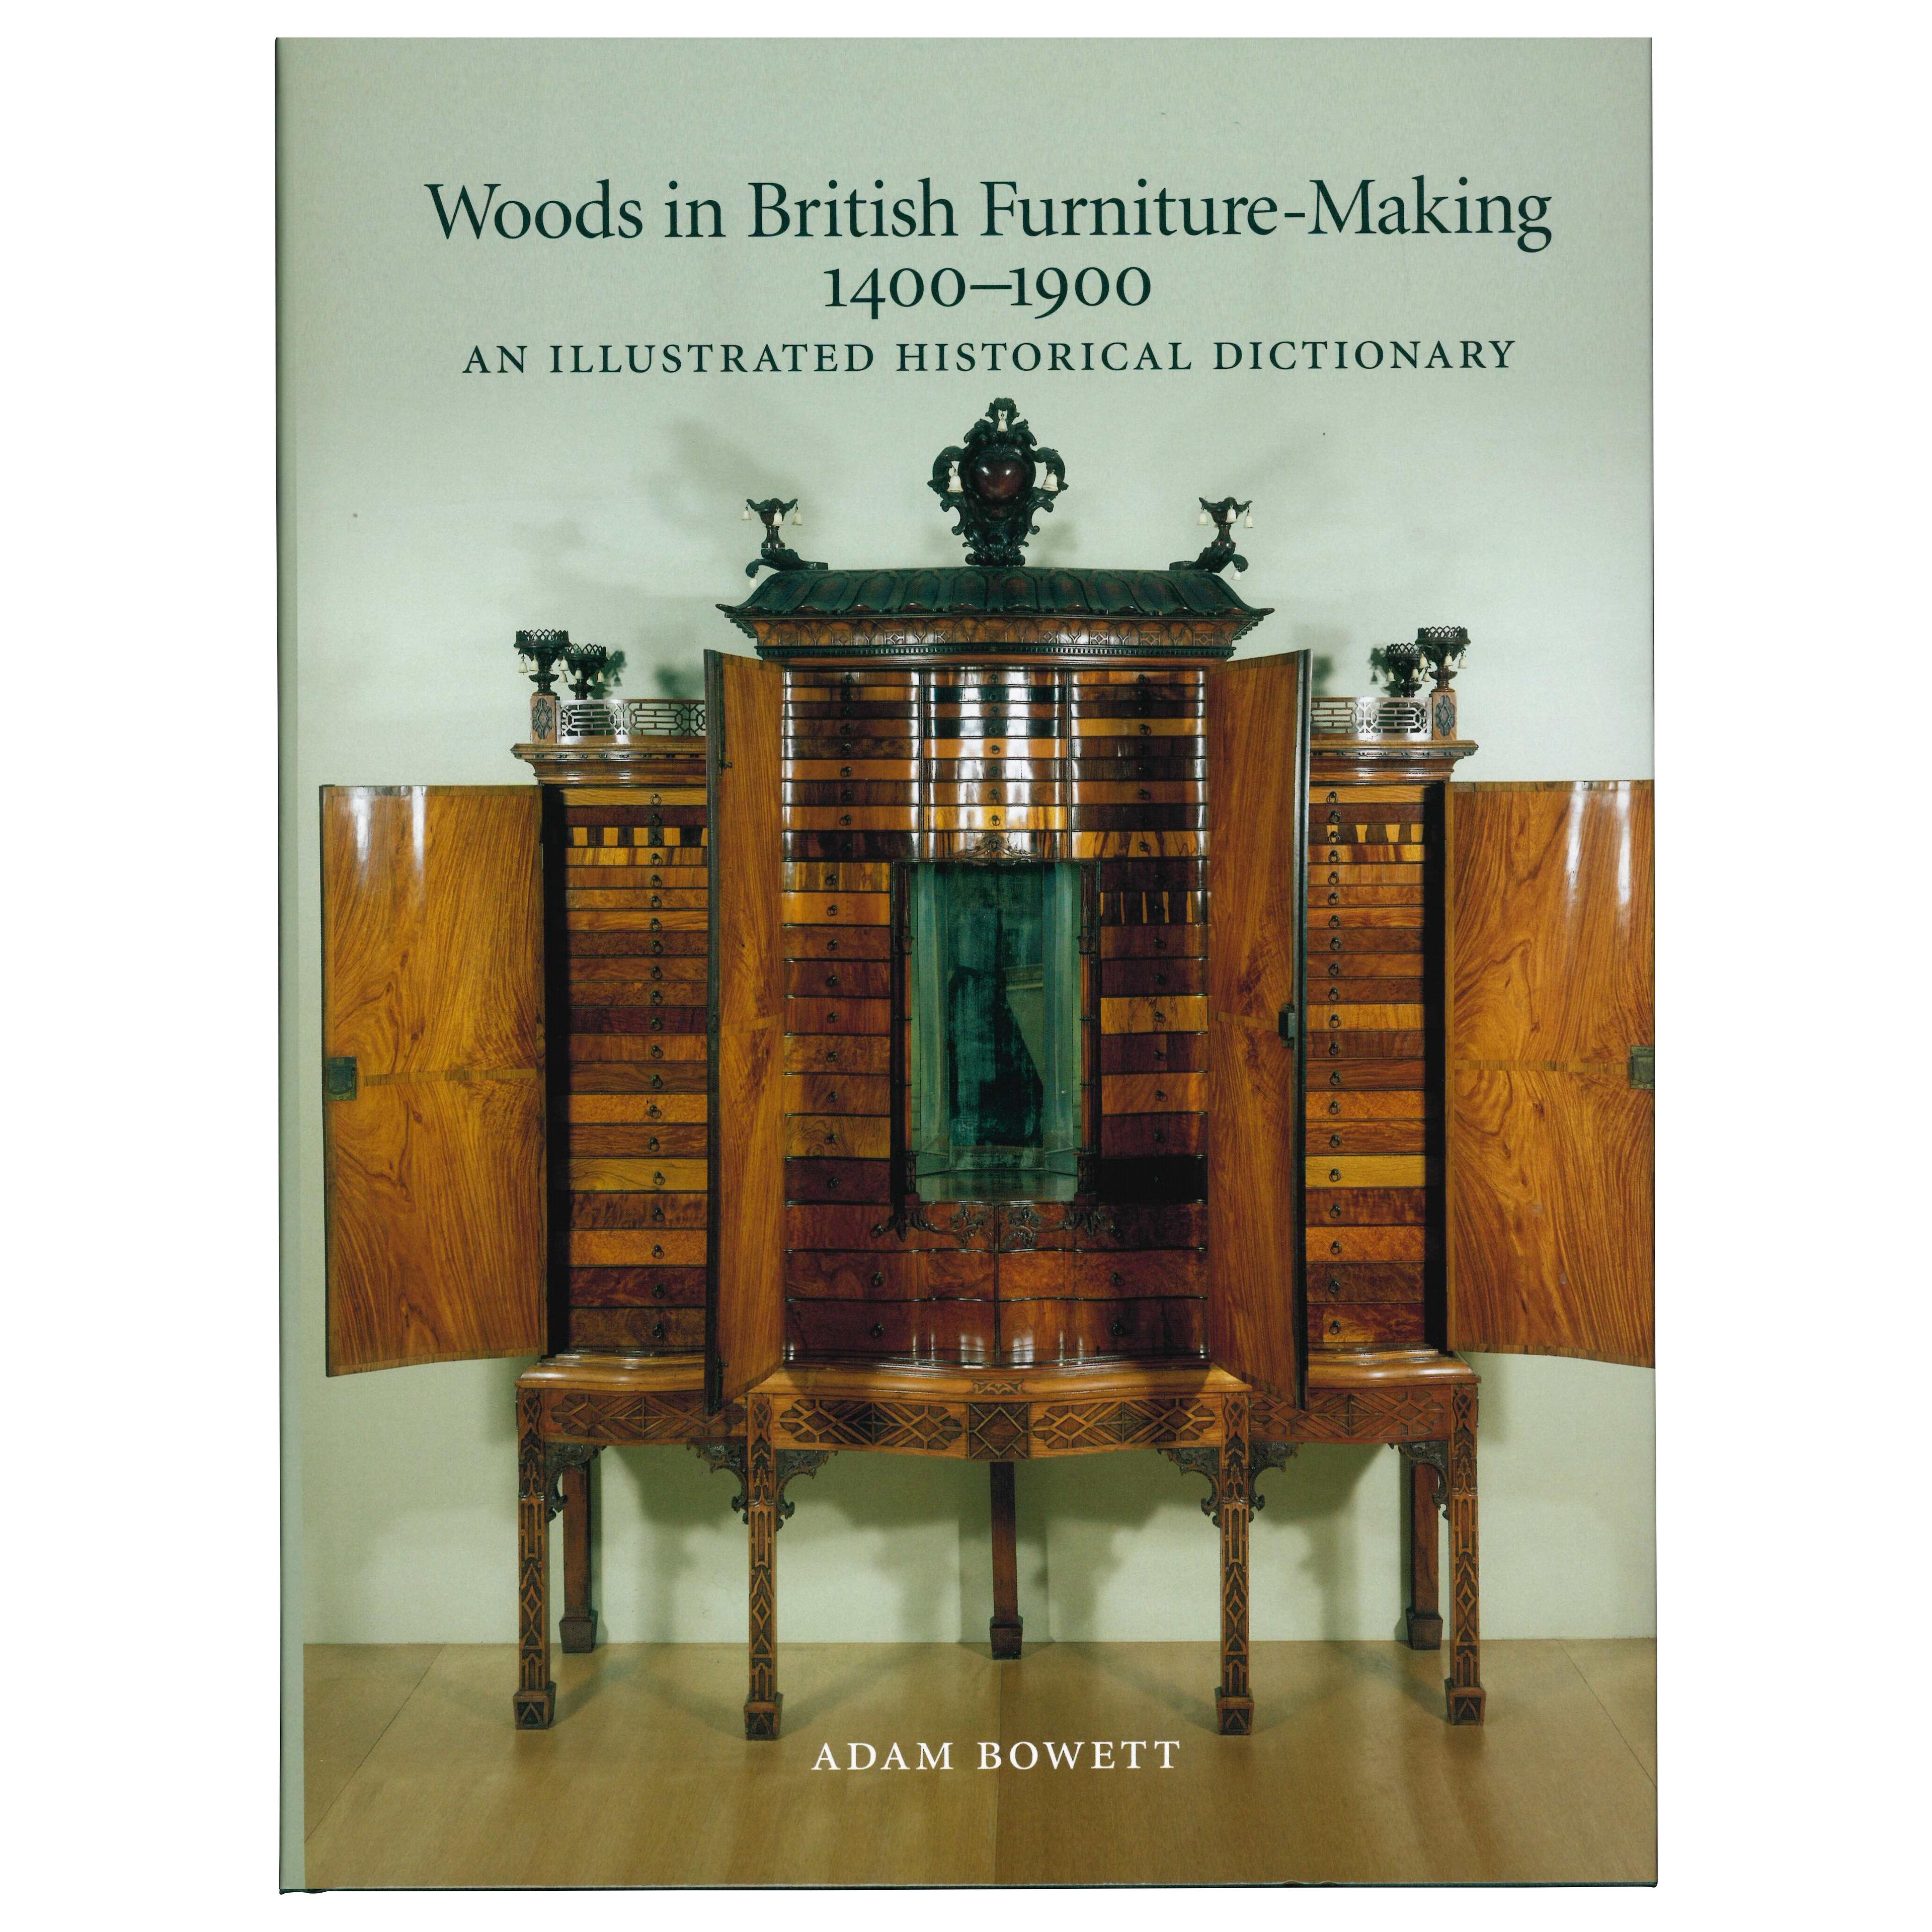 WOODS IN BRITISH FURNITURE-MAKING 1400-1900 by Adam Bowett. Book